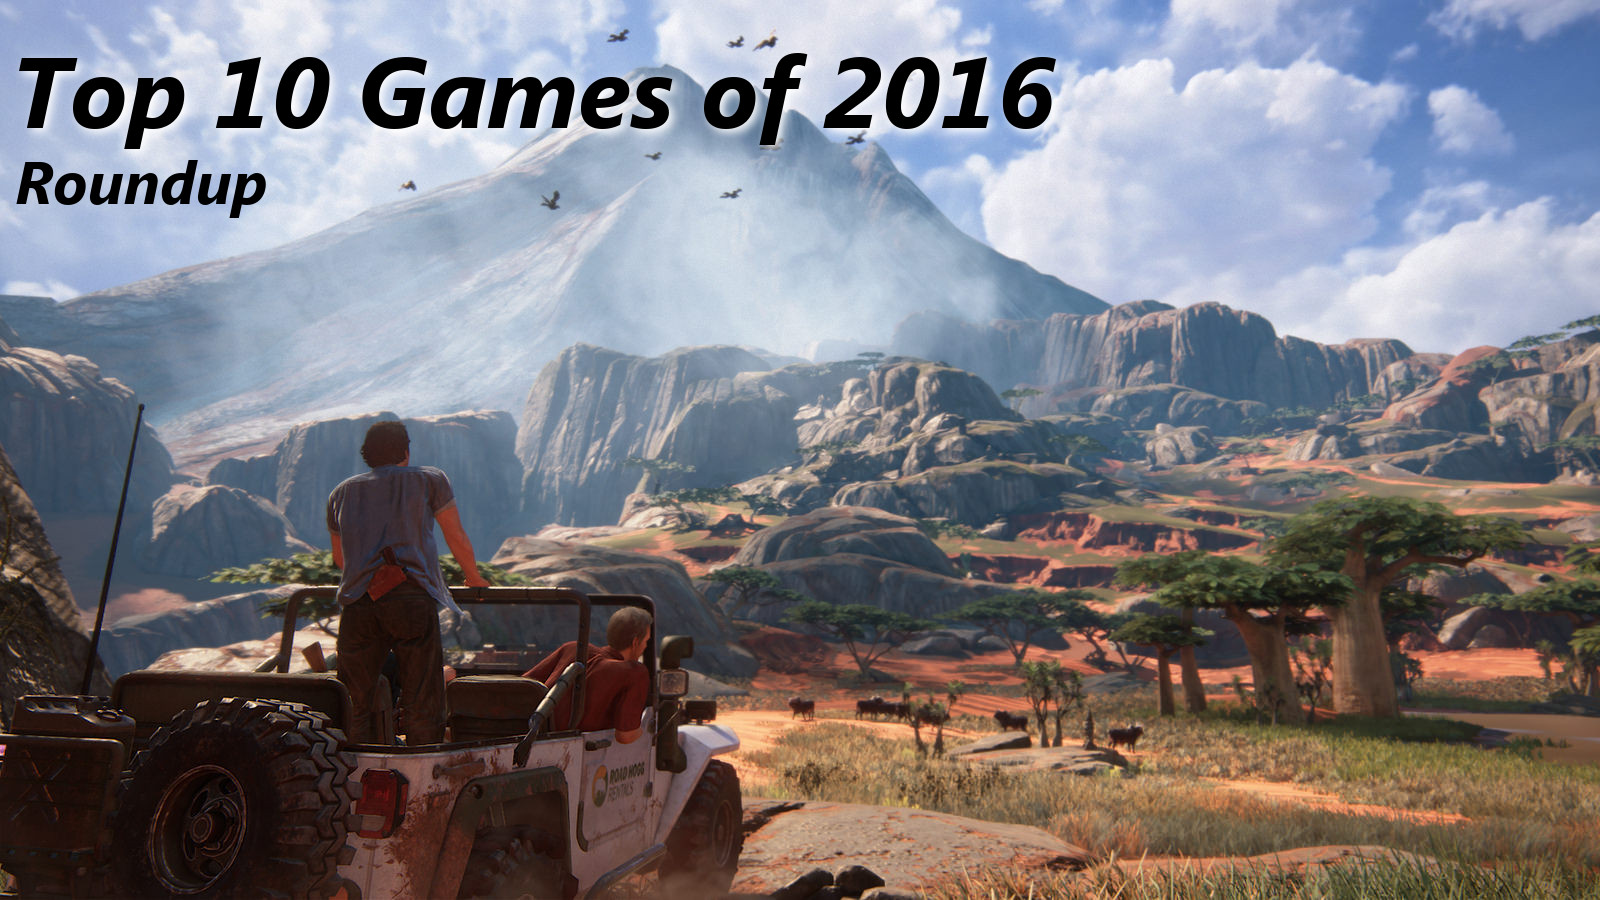 Top 10 Games of 2016 Roundup #10